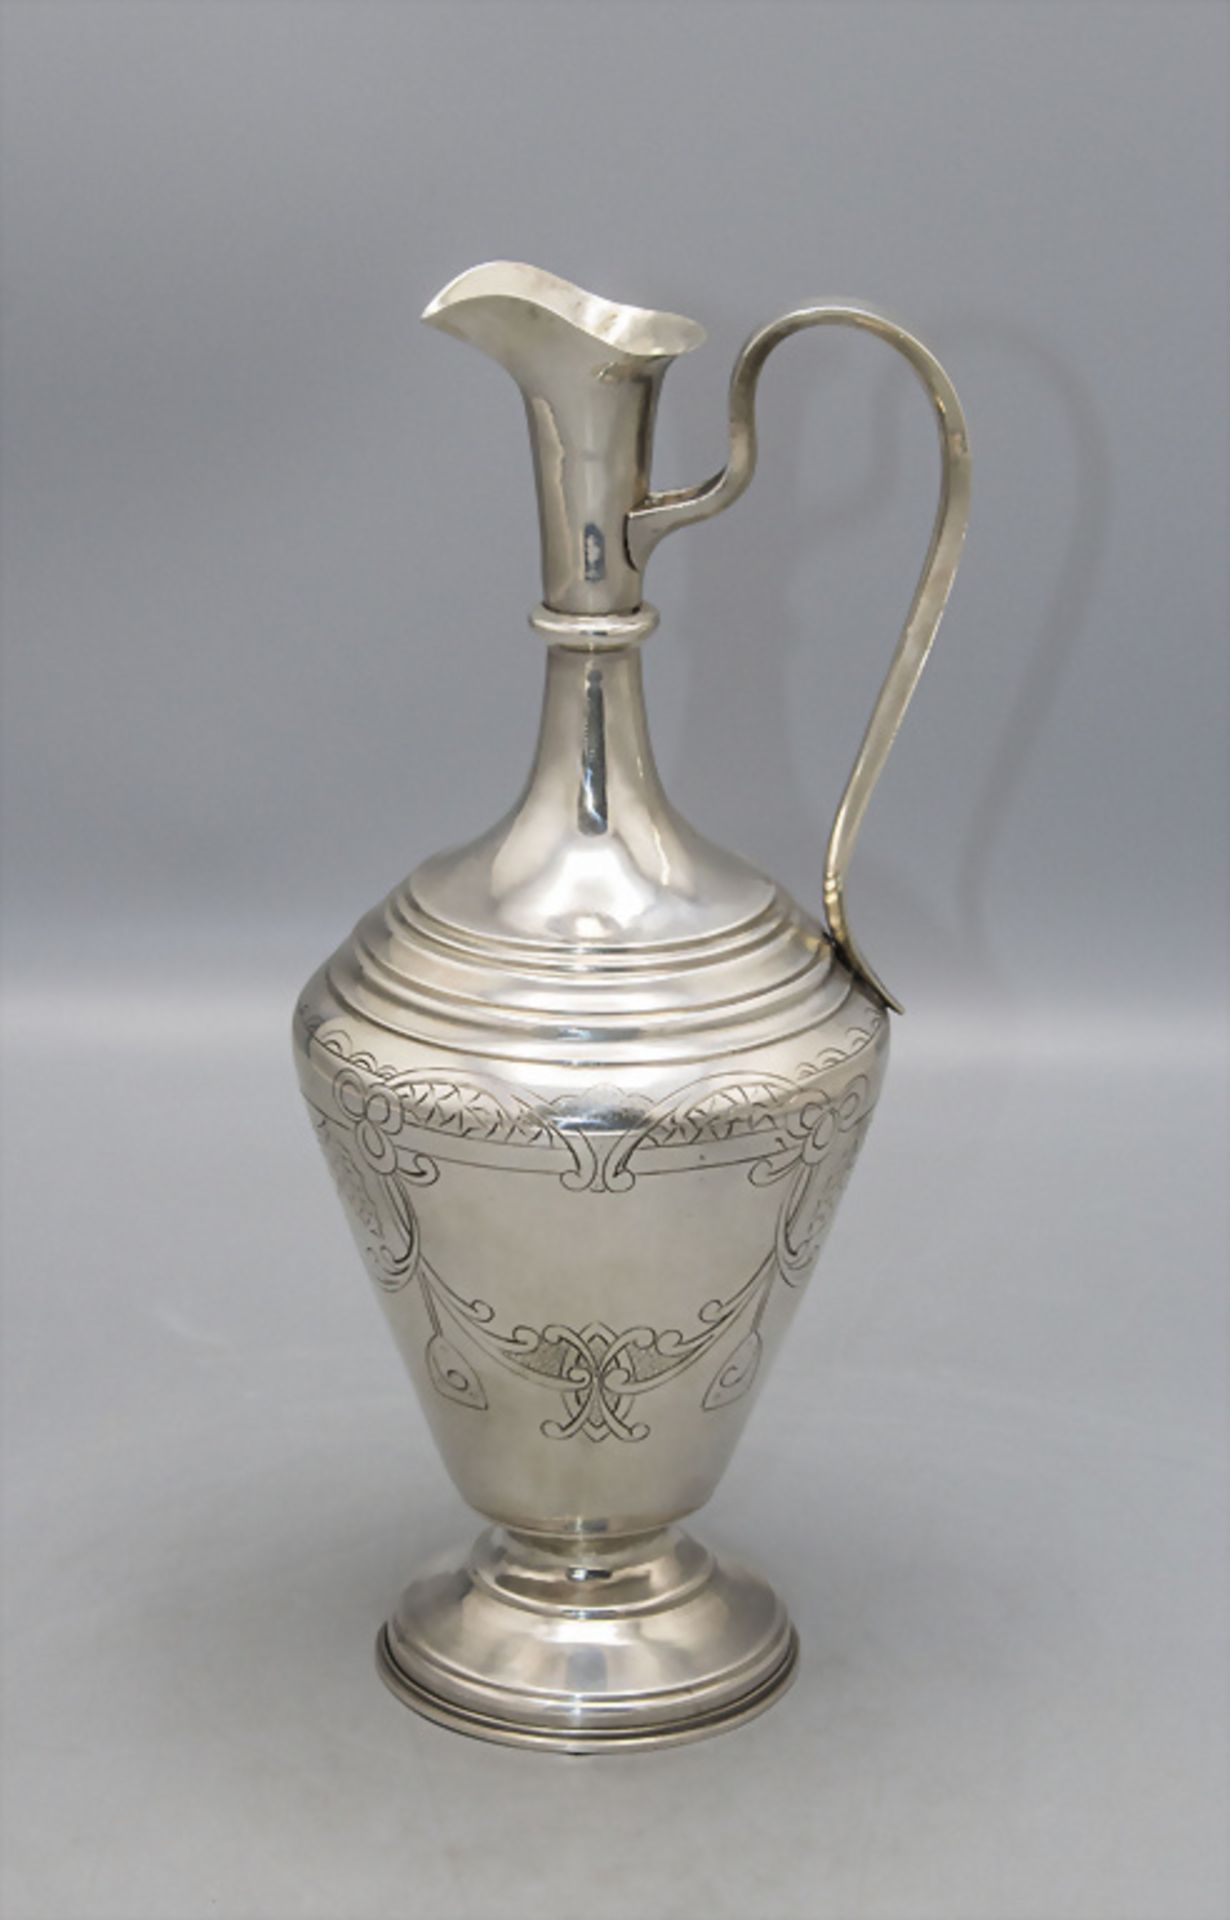 Schenkkrug / A silver jug, Vasily Sergeevich Sikachev, Moskau/Moscow, 1908-1917